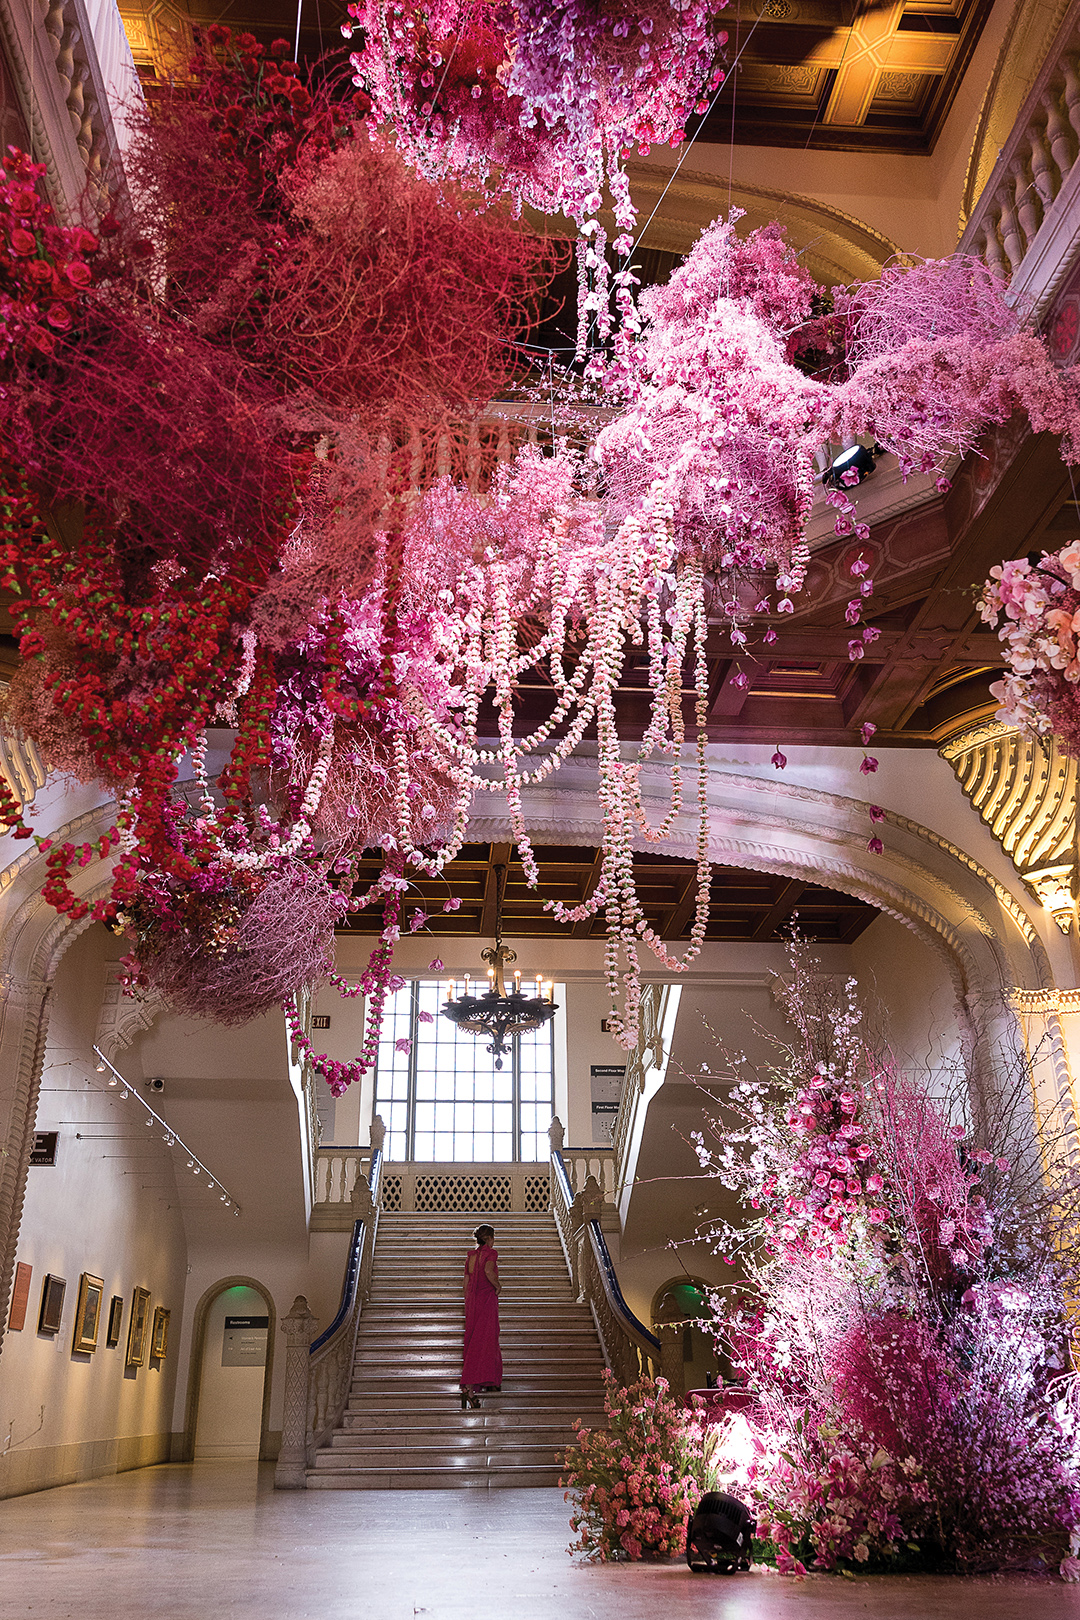 2023 Art Alive rotunda design by floral artist Natalie Gill